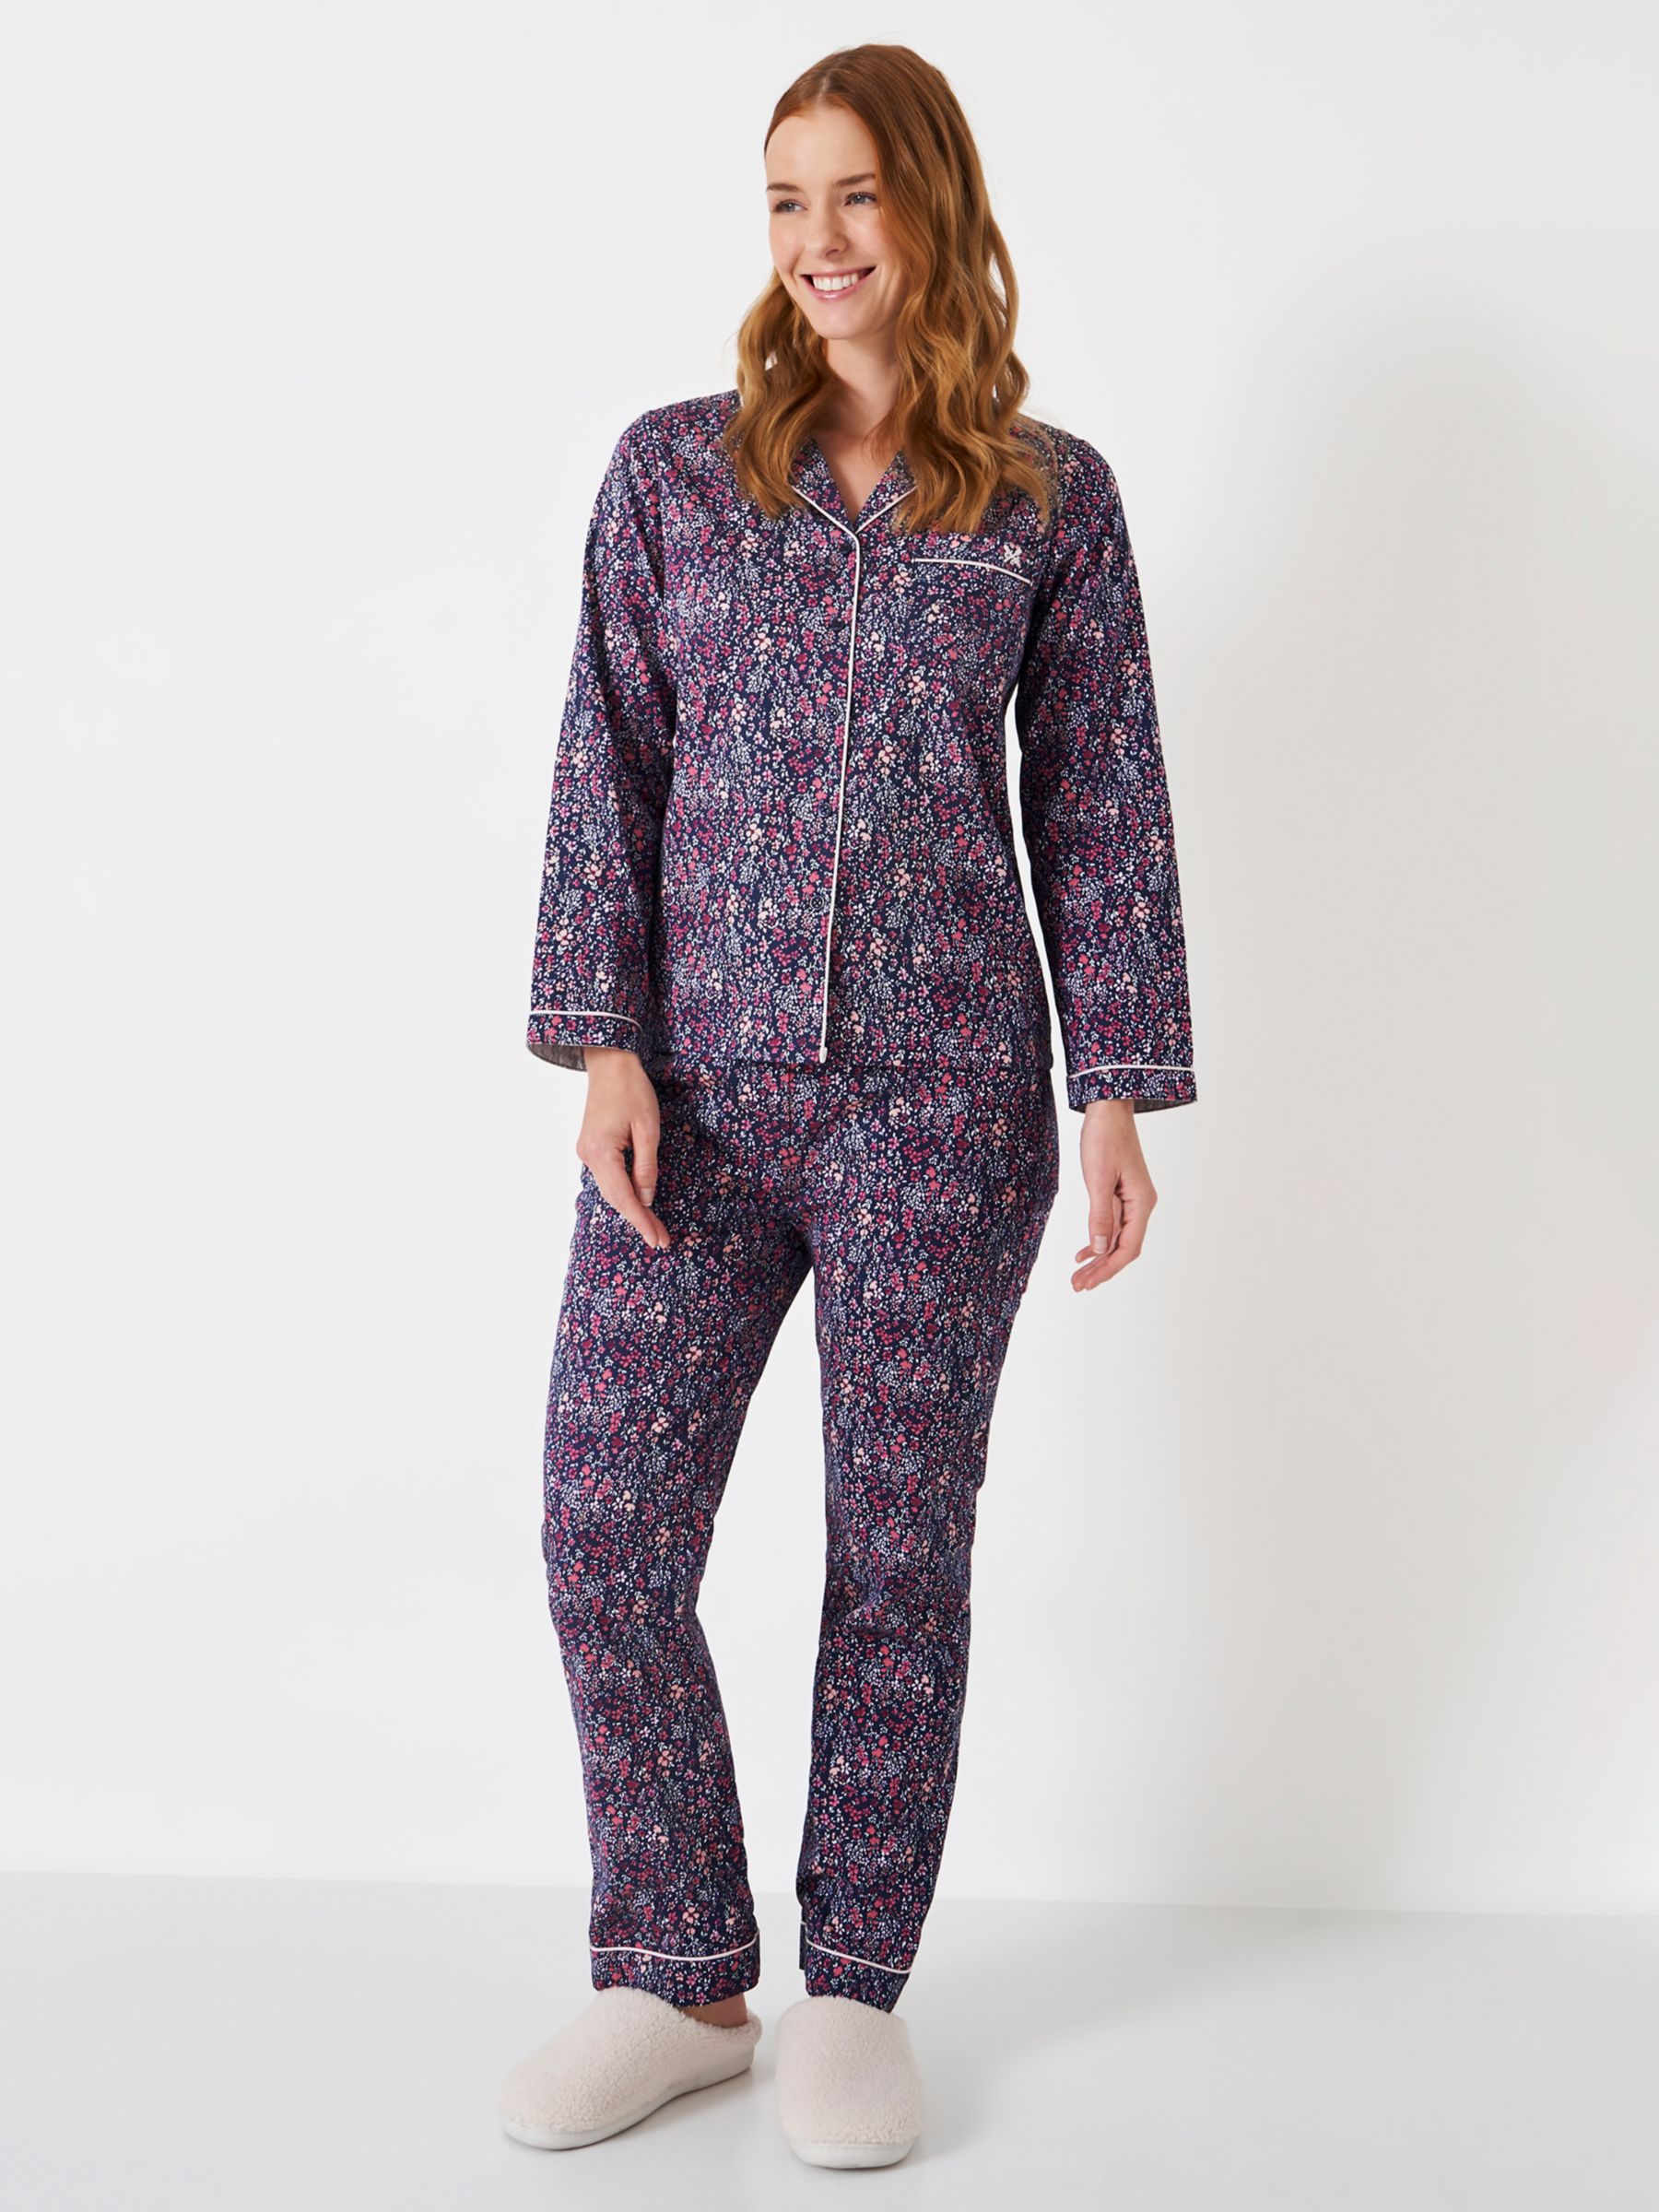 Crew Clothing Flannel Print Pyjamas at John Lewis & Partners